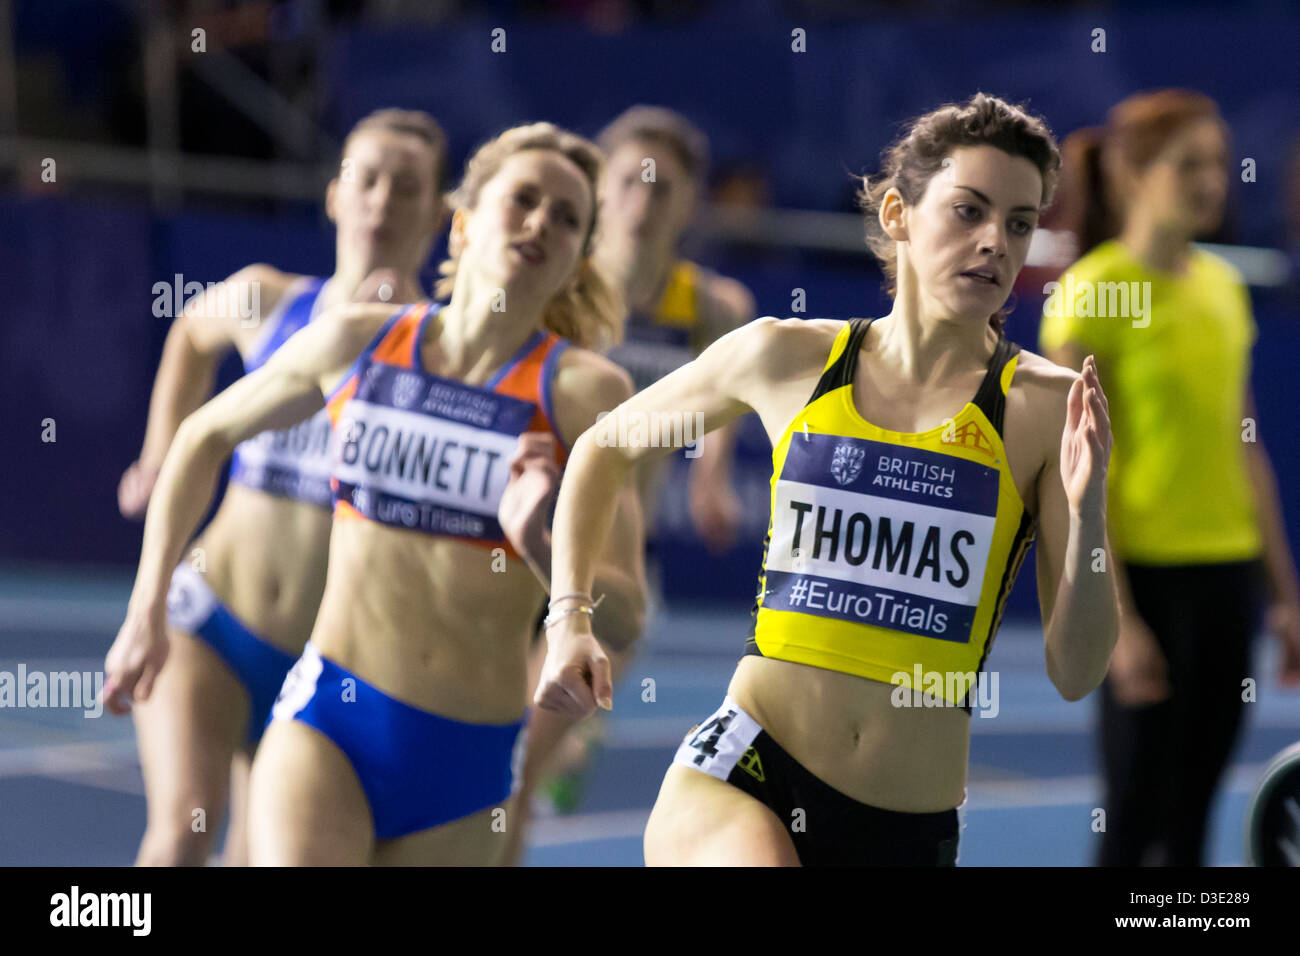 Maria THOMAS & Emily BONNETT, 400m Women's Heat 2, 2013 British Athletics European Trials (EIS) Sheffield, UK. Stock Photo